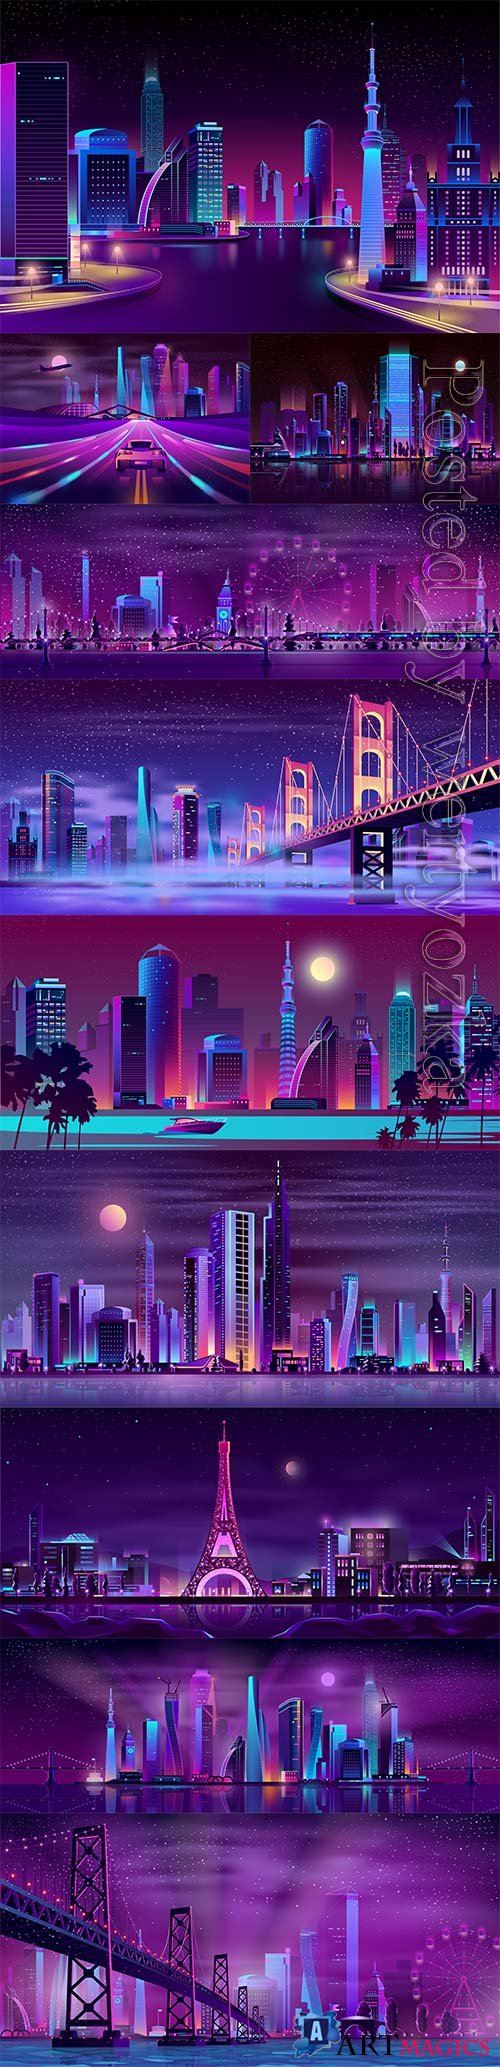 Night streets cartoon vector background